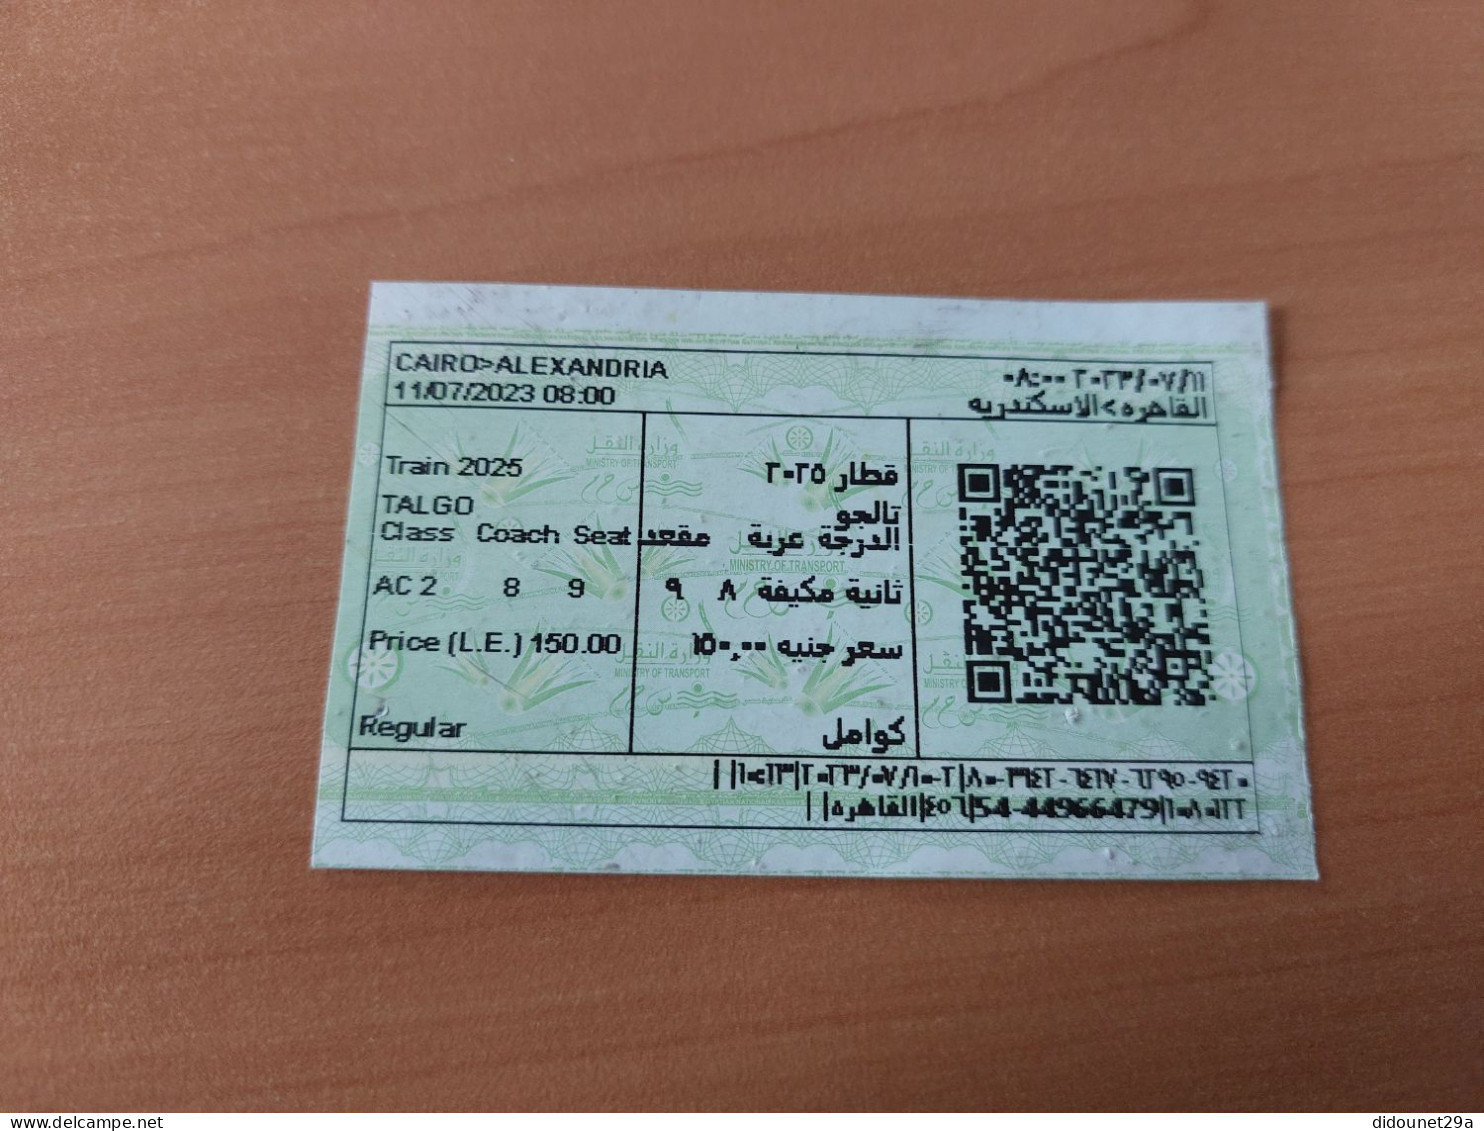 Ticket De Transport (train) "CAIRO - ALEXANDRIA" Egypte - World